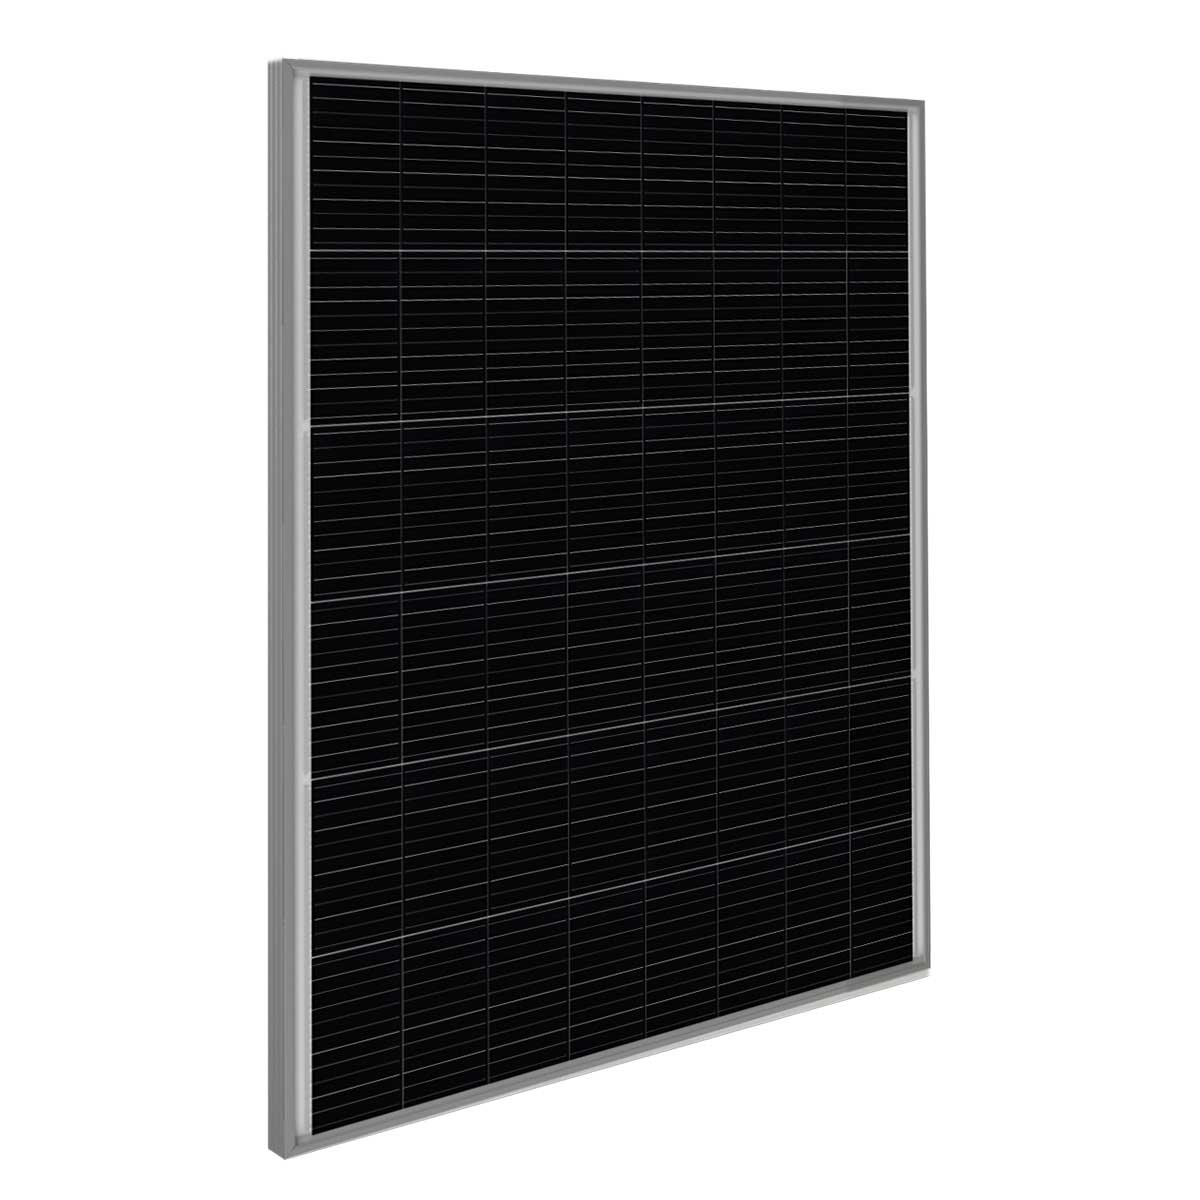 TommaTech 240Wp 48PM M12 HC-MB Solar Panel